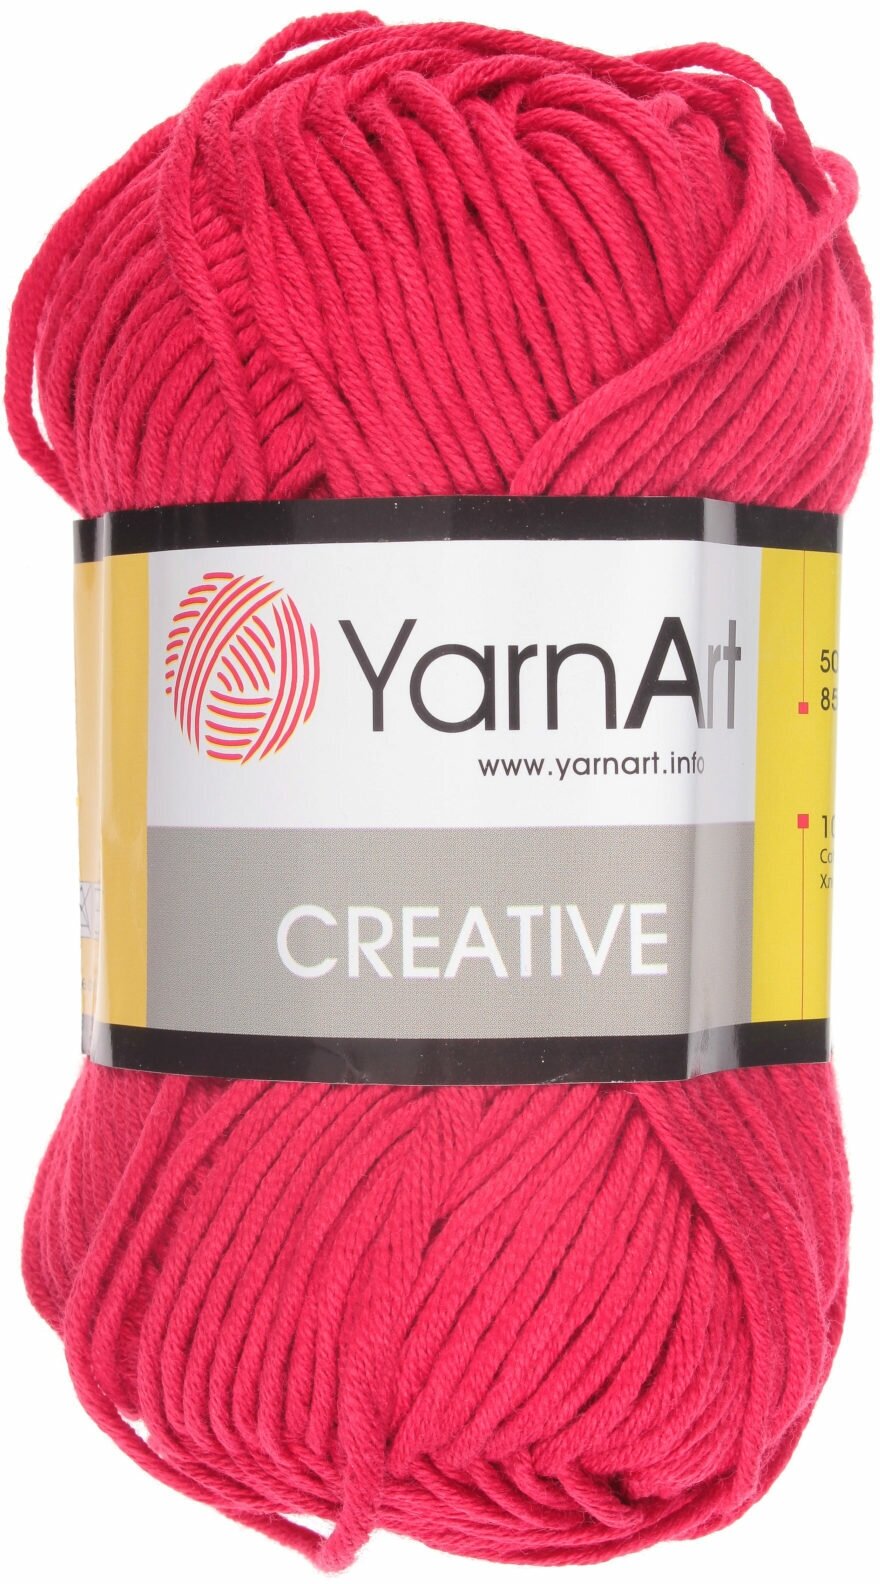 Пряжа YarnArt Creative красный (237), 100%хлопок, 85м, 50г, 1шт